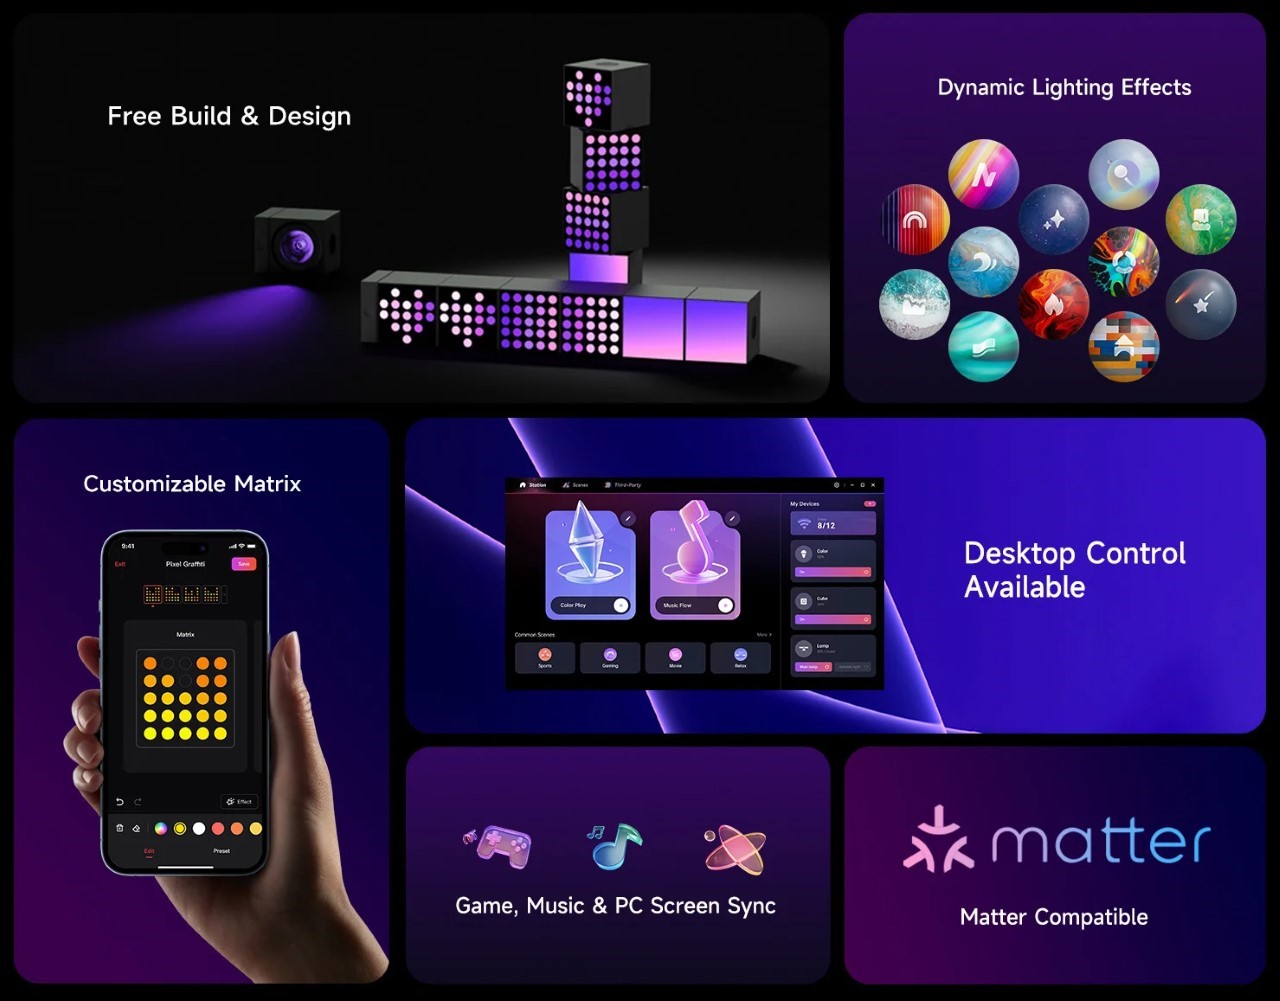 Yeelight Cube Smart Lamps w/ Matter (review) - Homekit News and